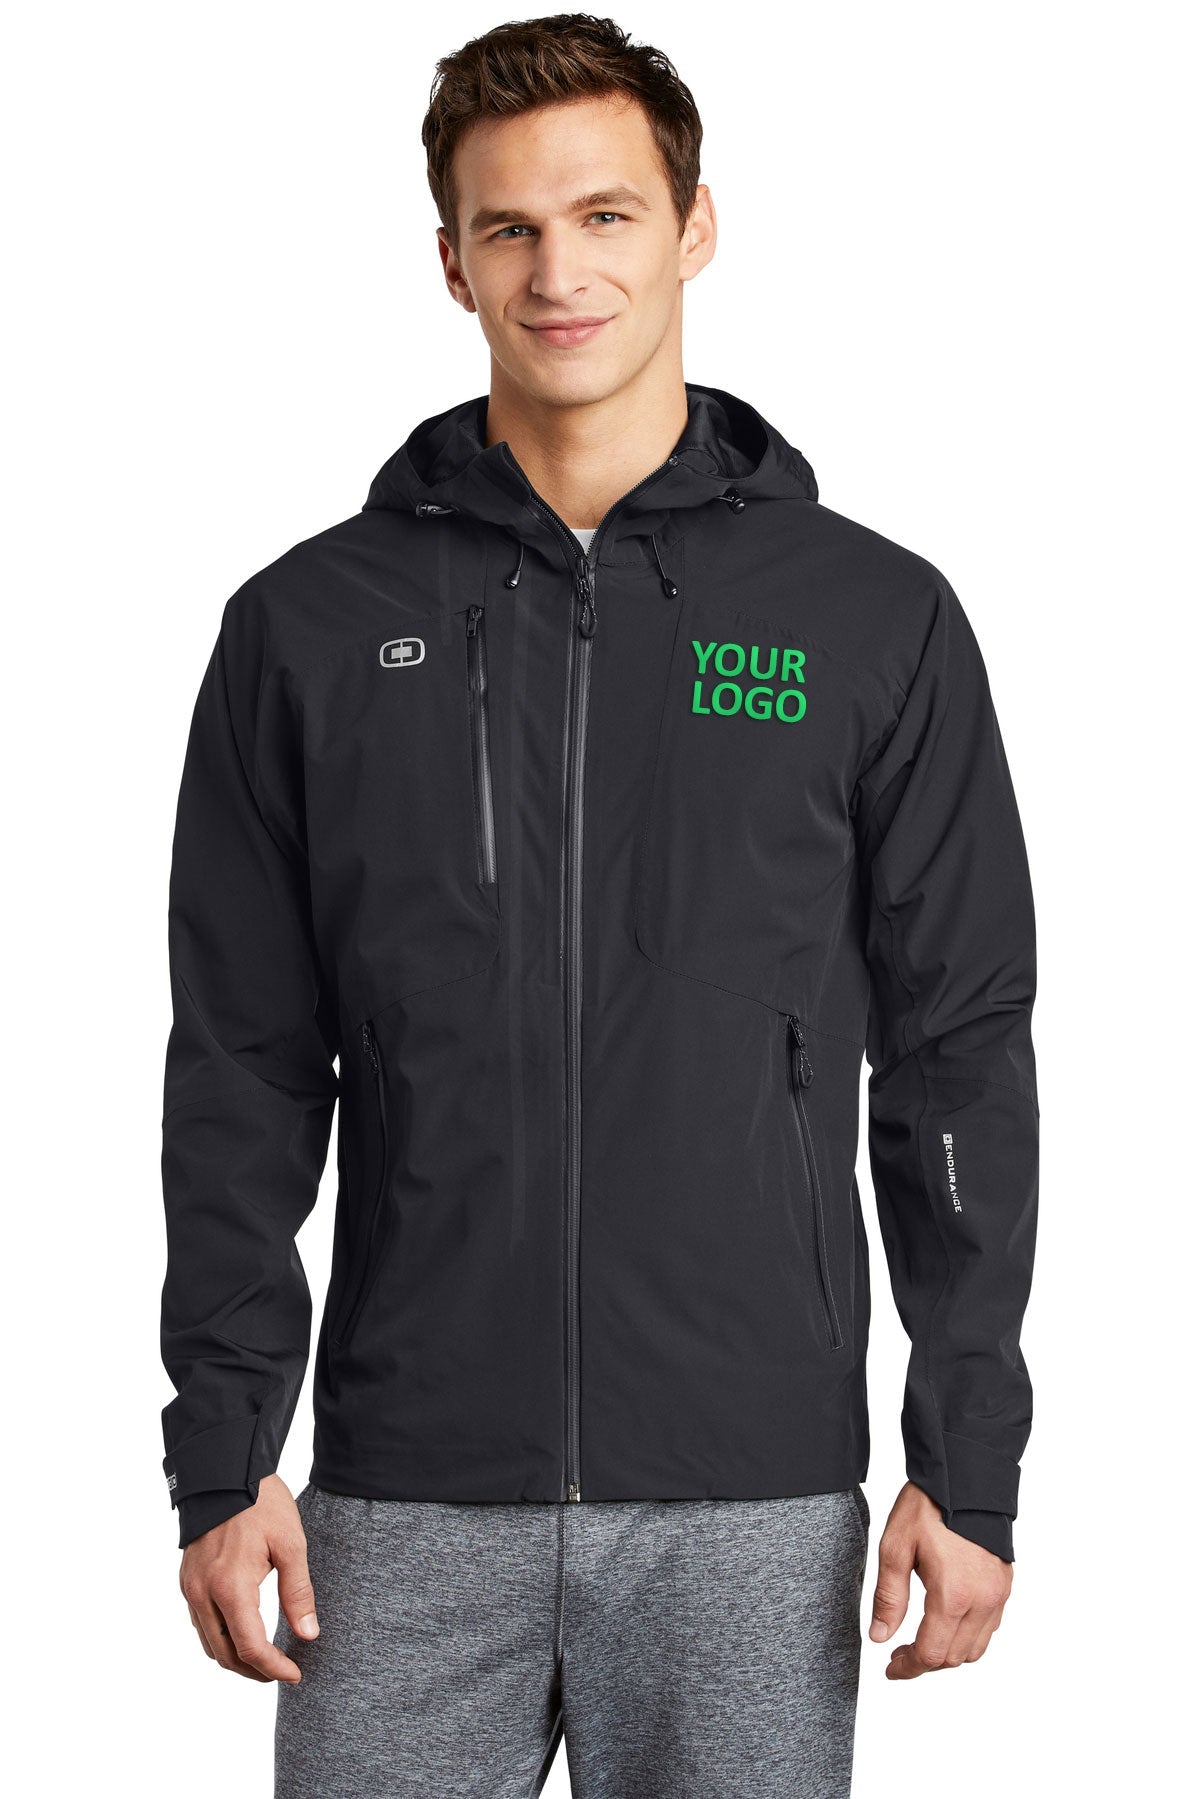 OGIO Endurance Blacktop OE750 company embroidered jackets